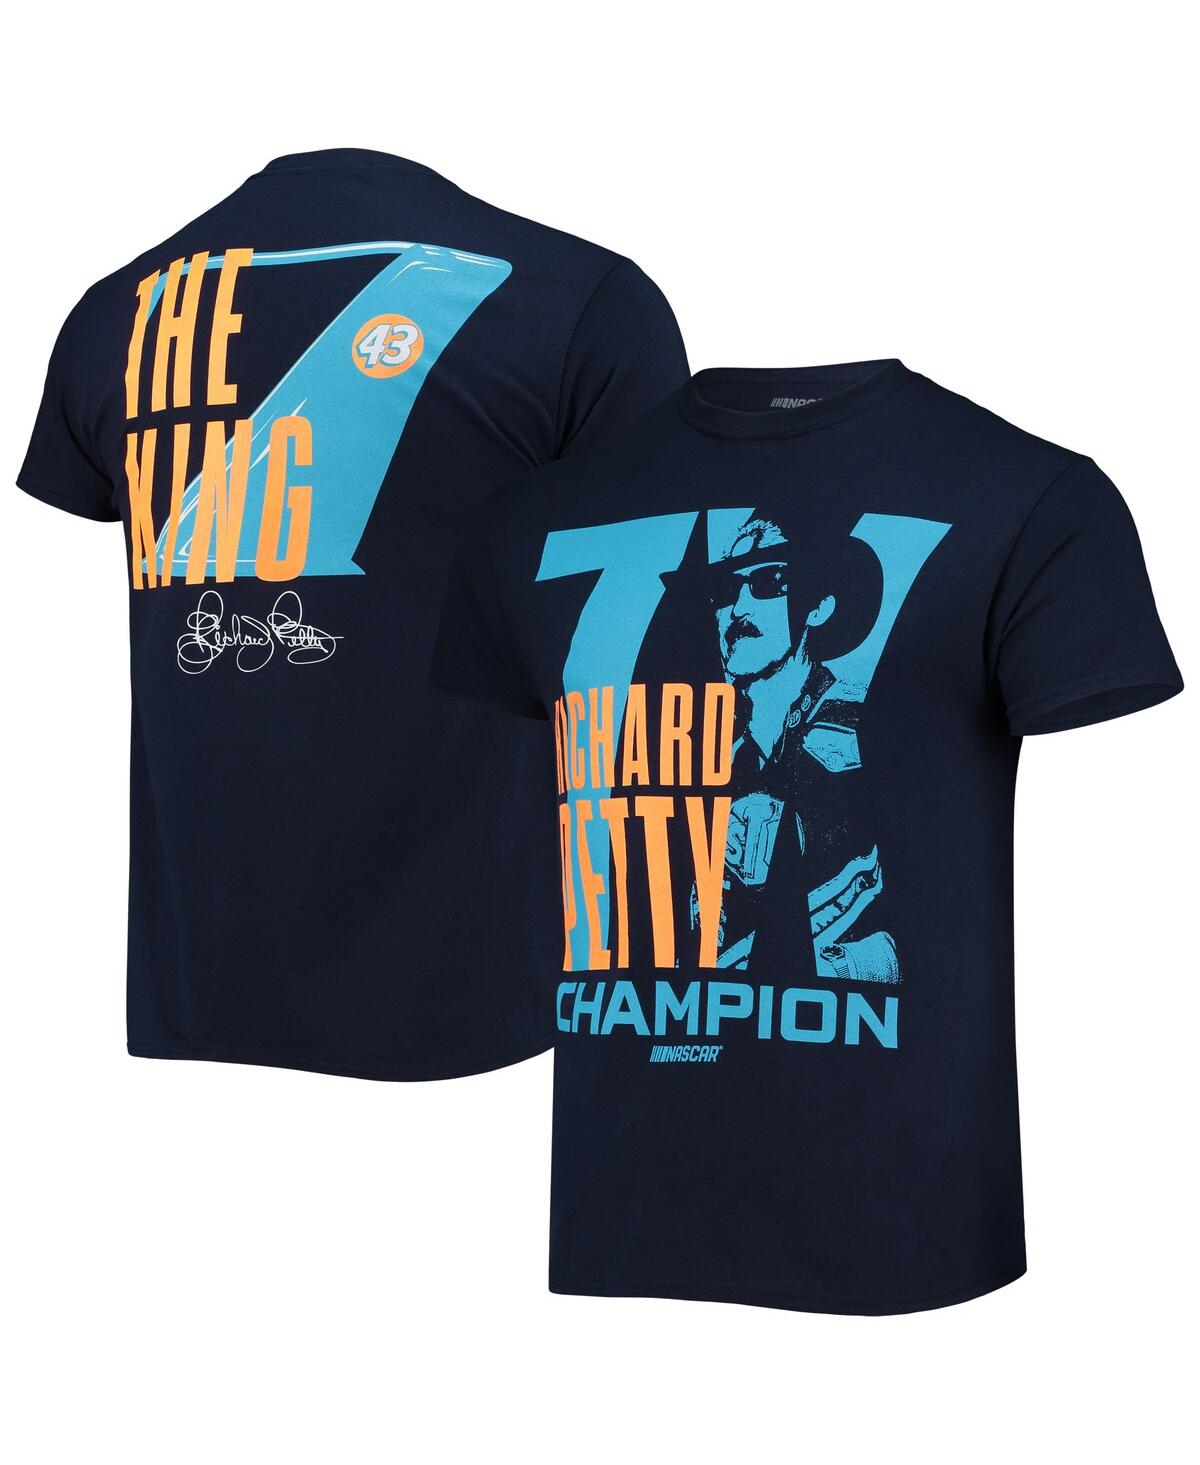 Men's Checkered Flag Sports Navy Richard Petty 7X Champion T-shirt - Navy